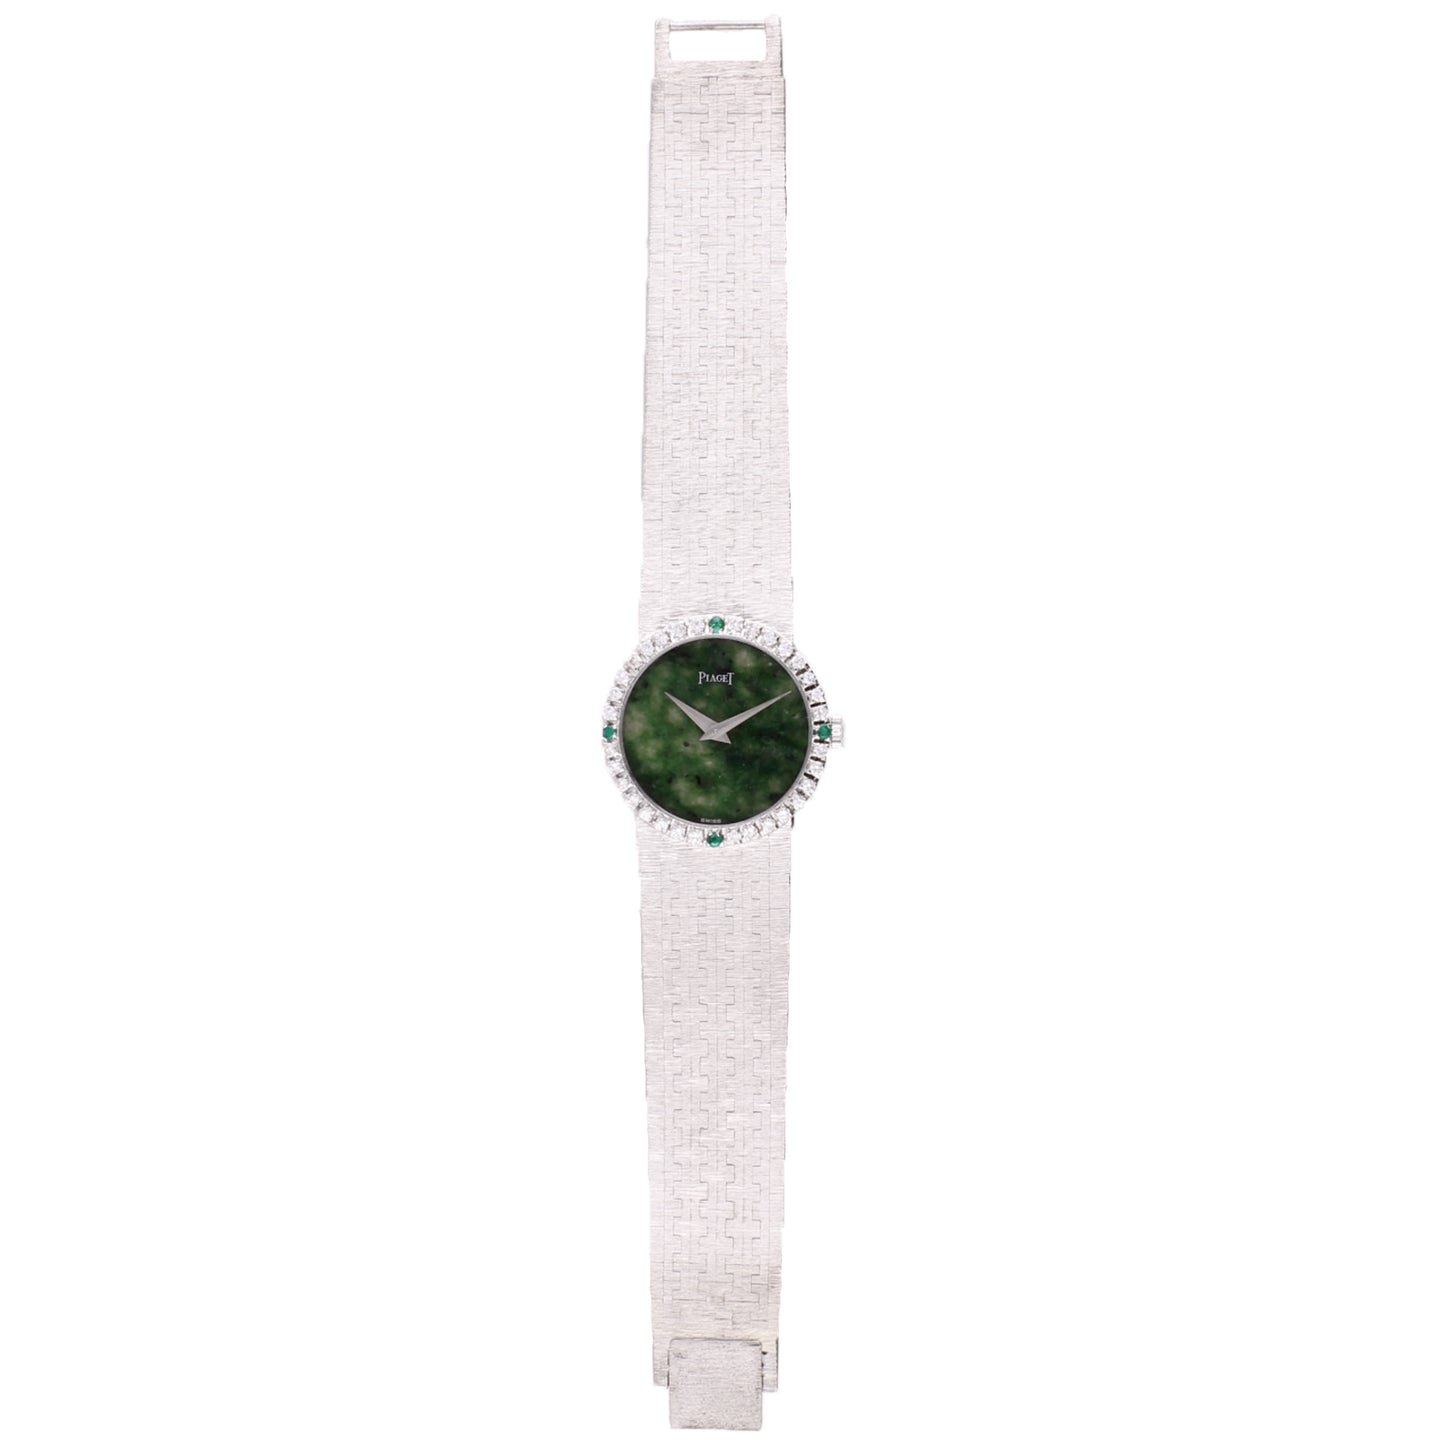 18ct white gold jade dial with diamond set bezel bracelet watch. Made 1970